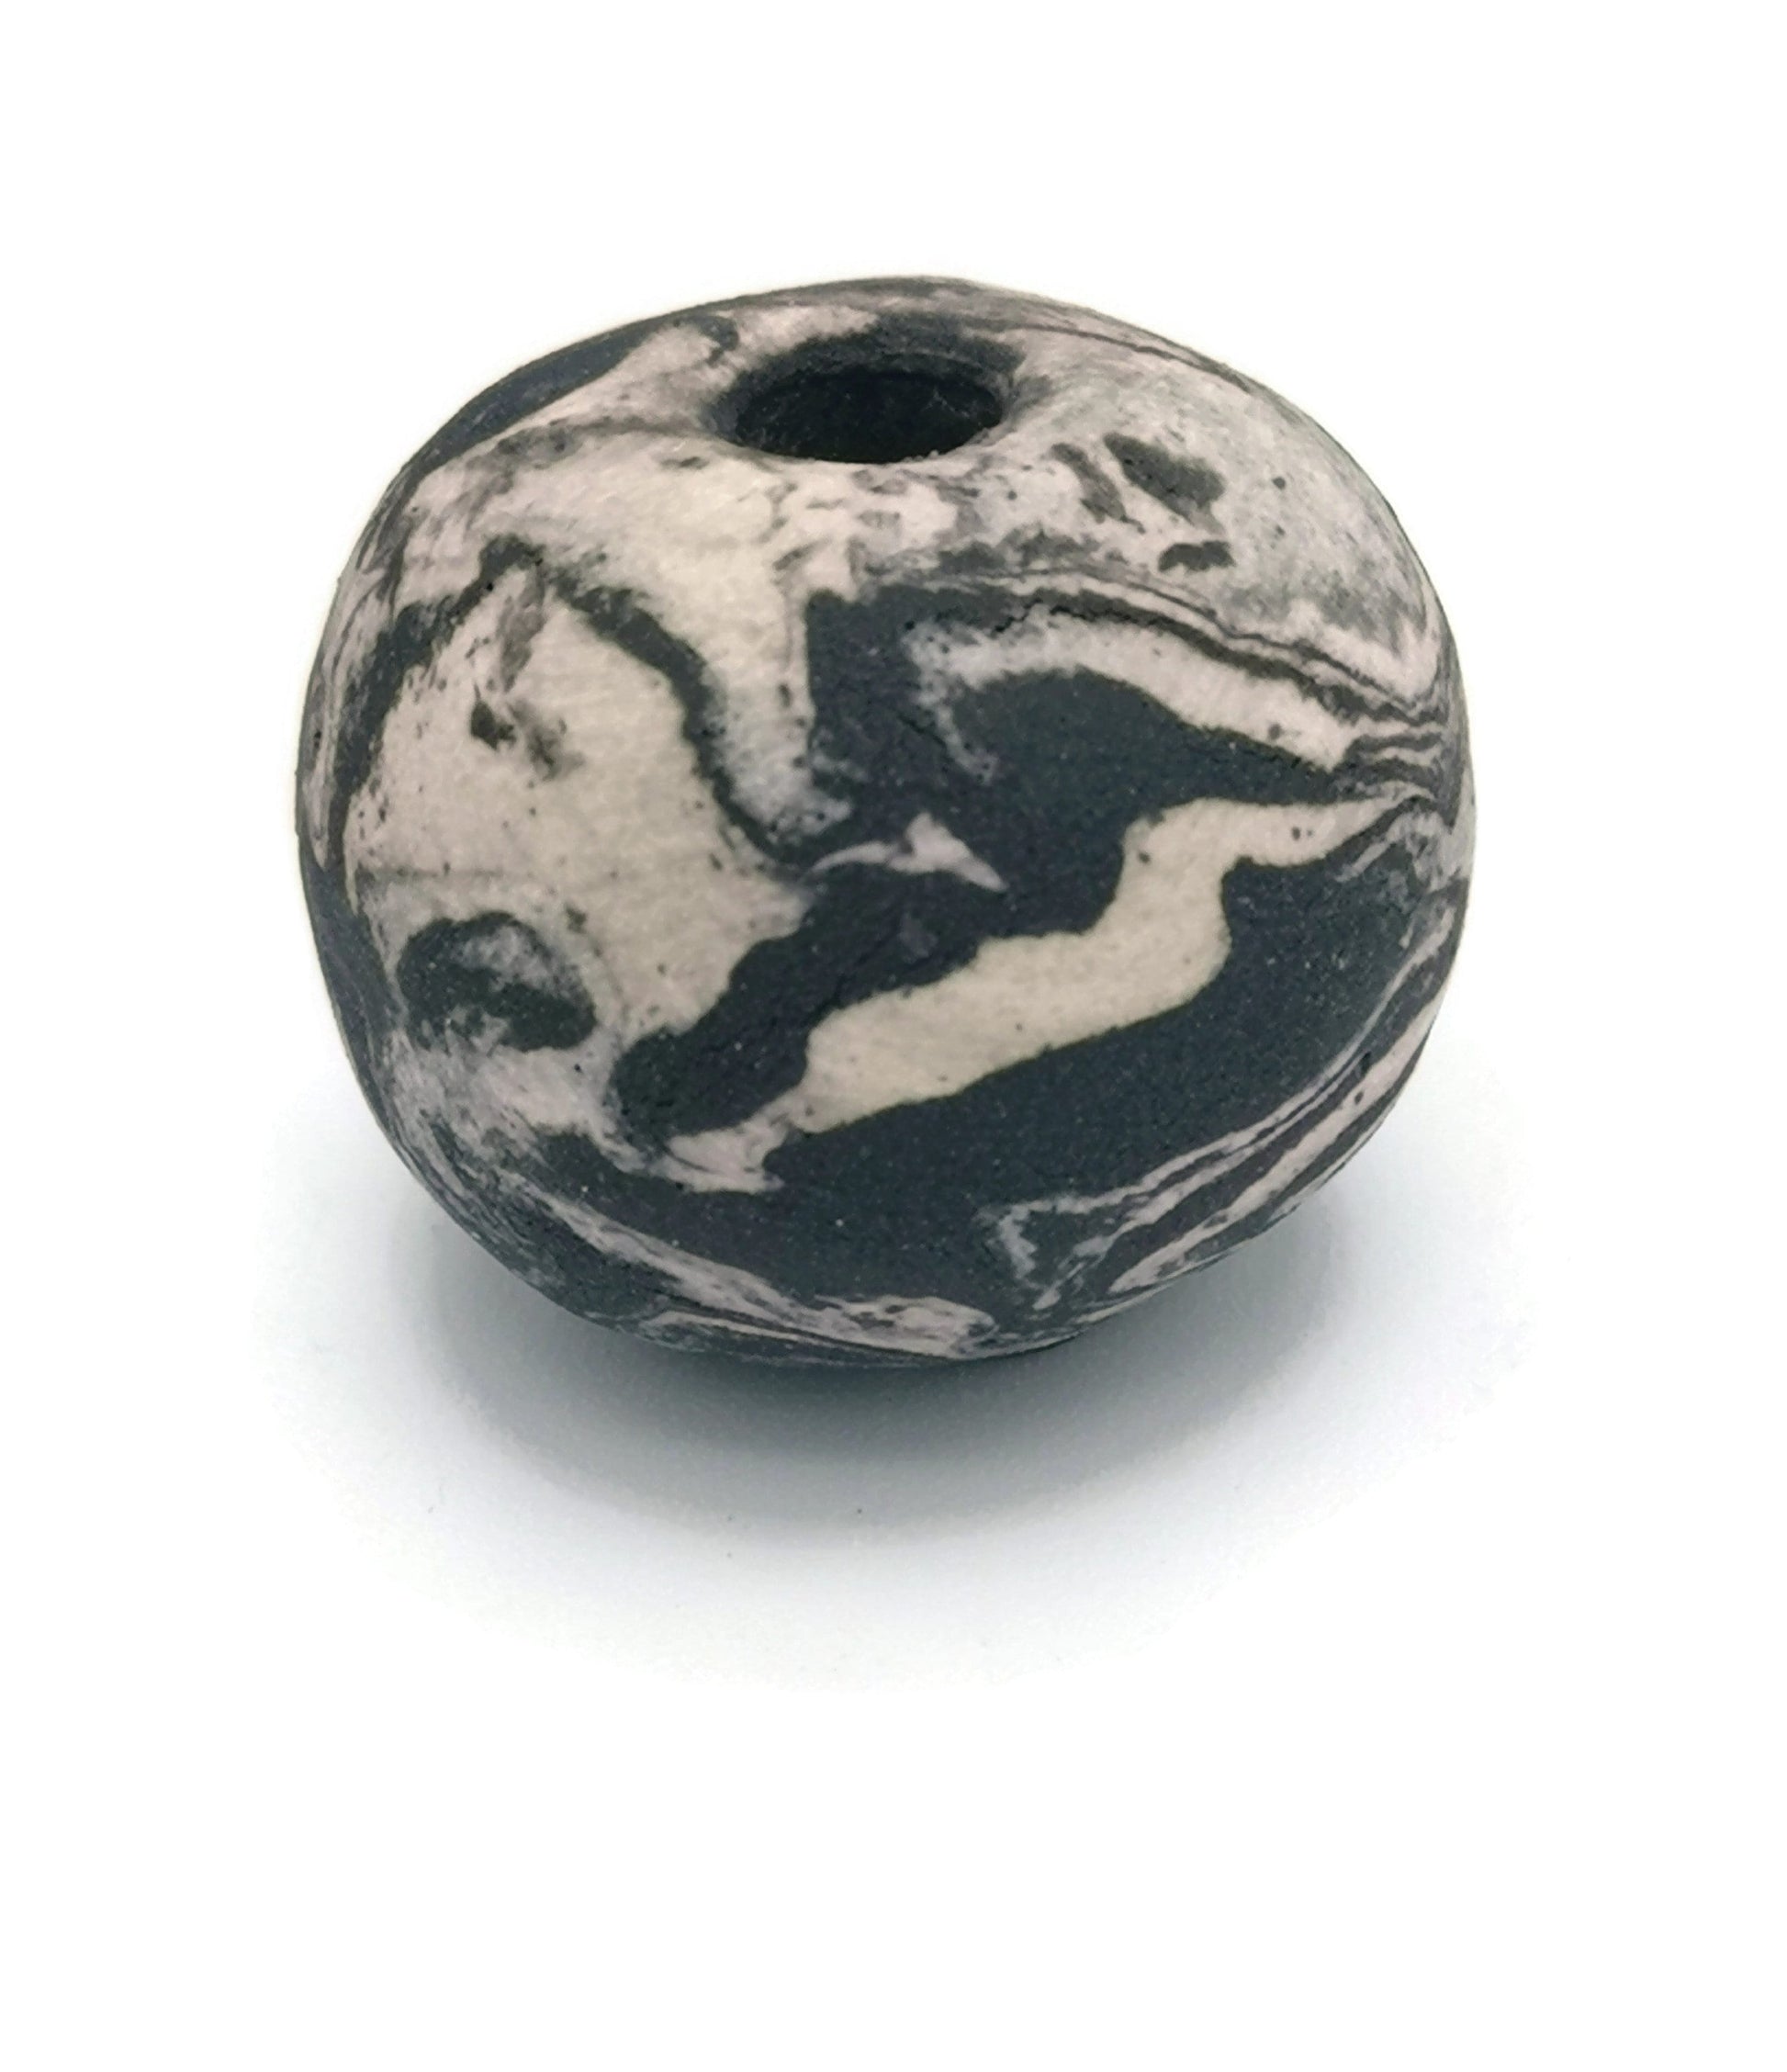 1Pc 30mm Handmade Ceramic Macrame Beads Large Hole, Extra Large Marbled Black And White Jewelry Making Supplies, Artisan Beads - Ceramica Ana Rafael